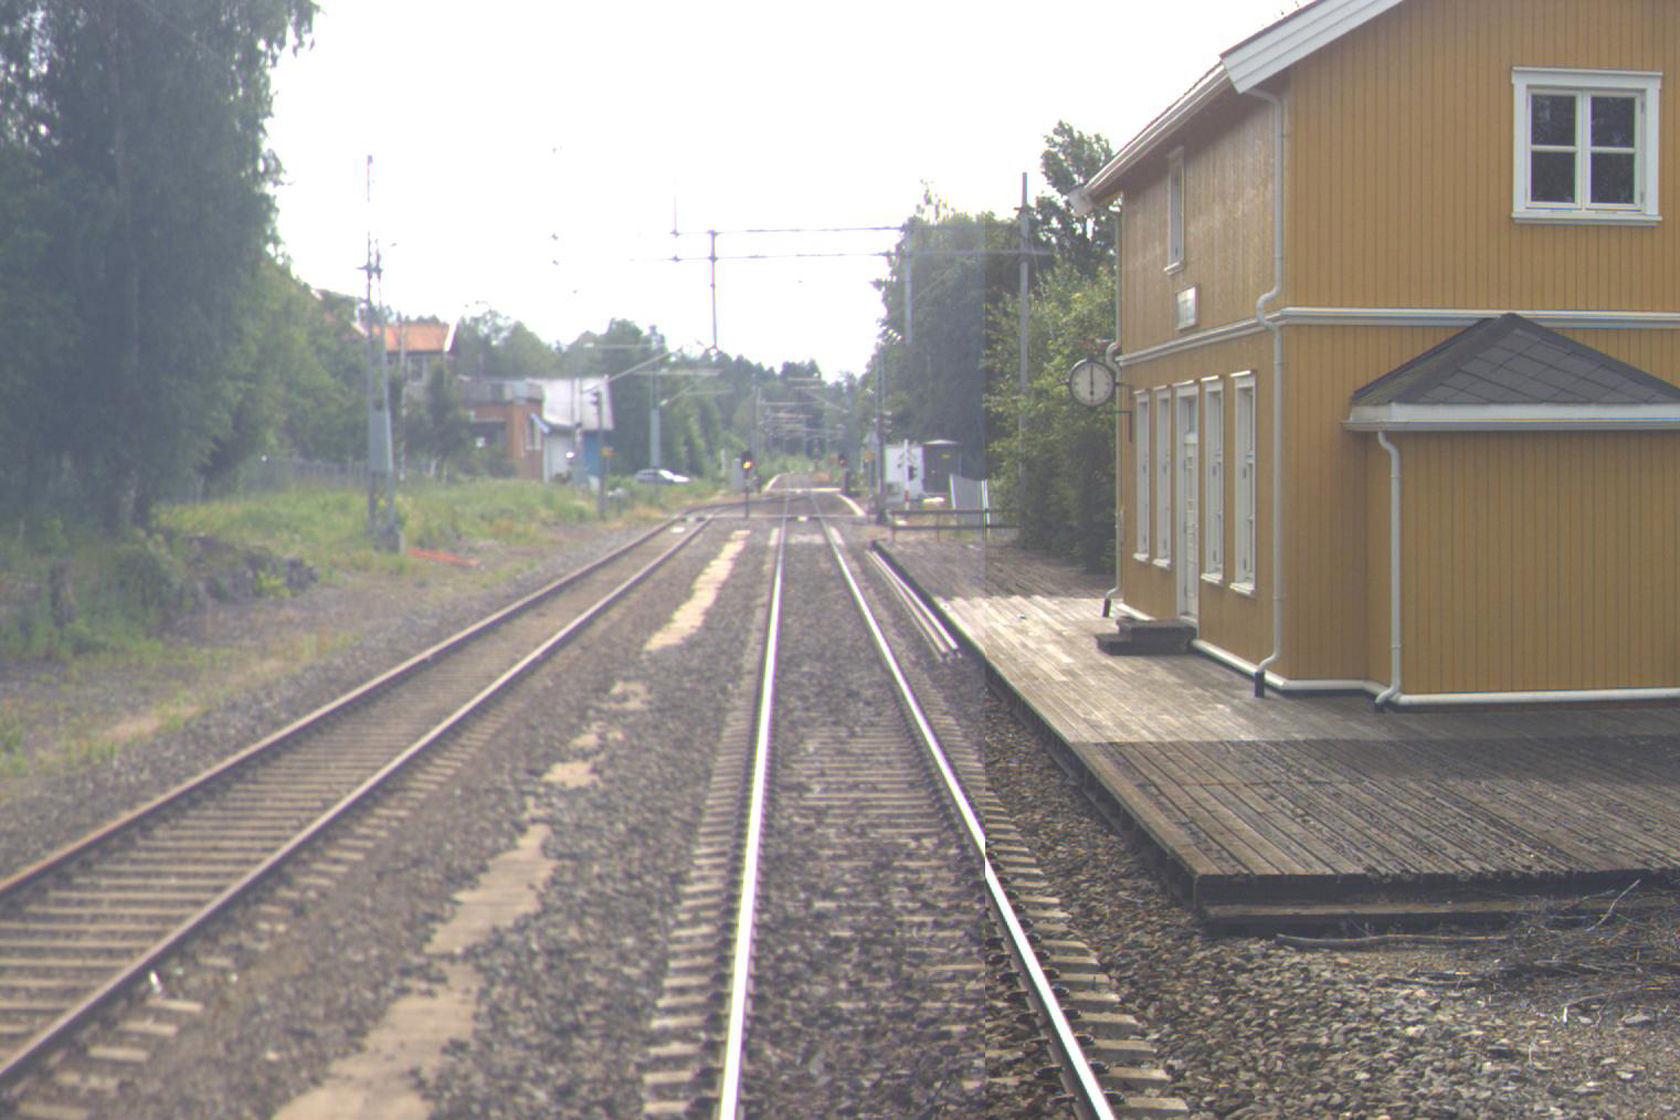 Tracks and station building at Skotterud station